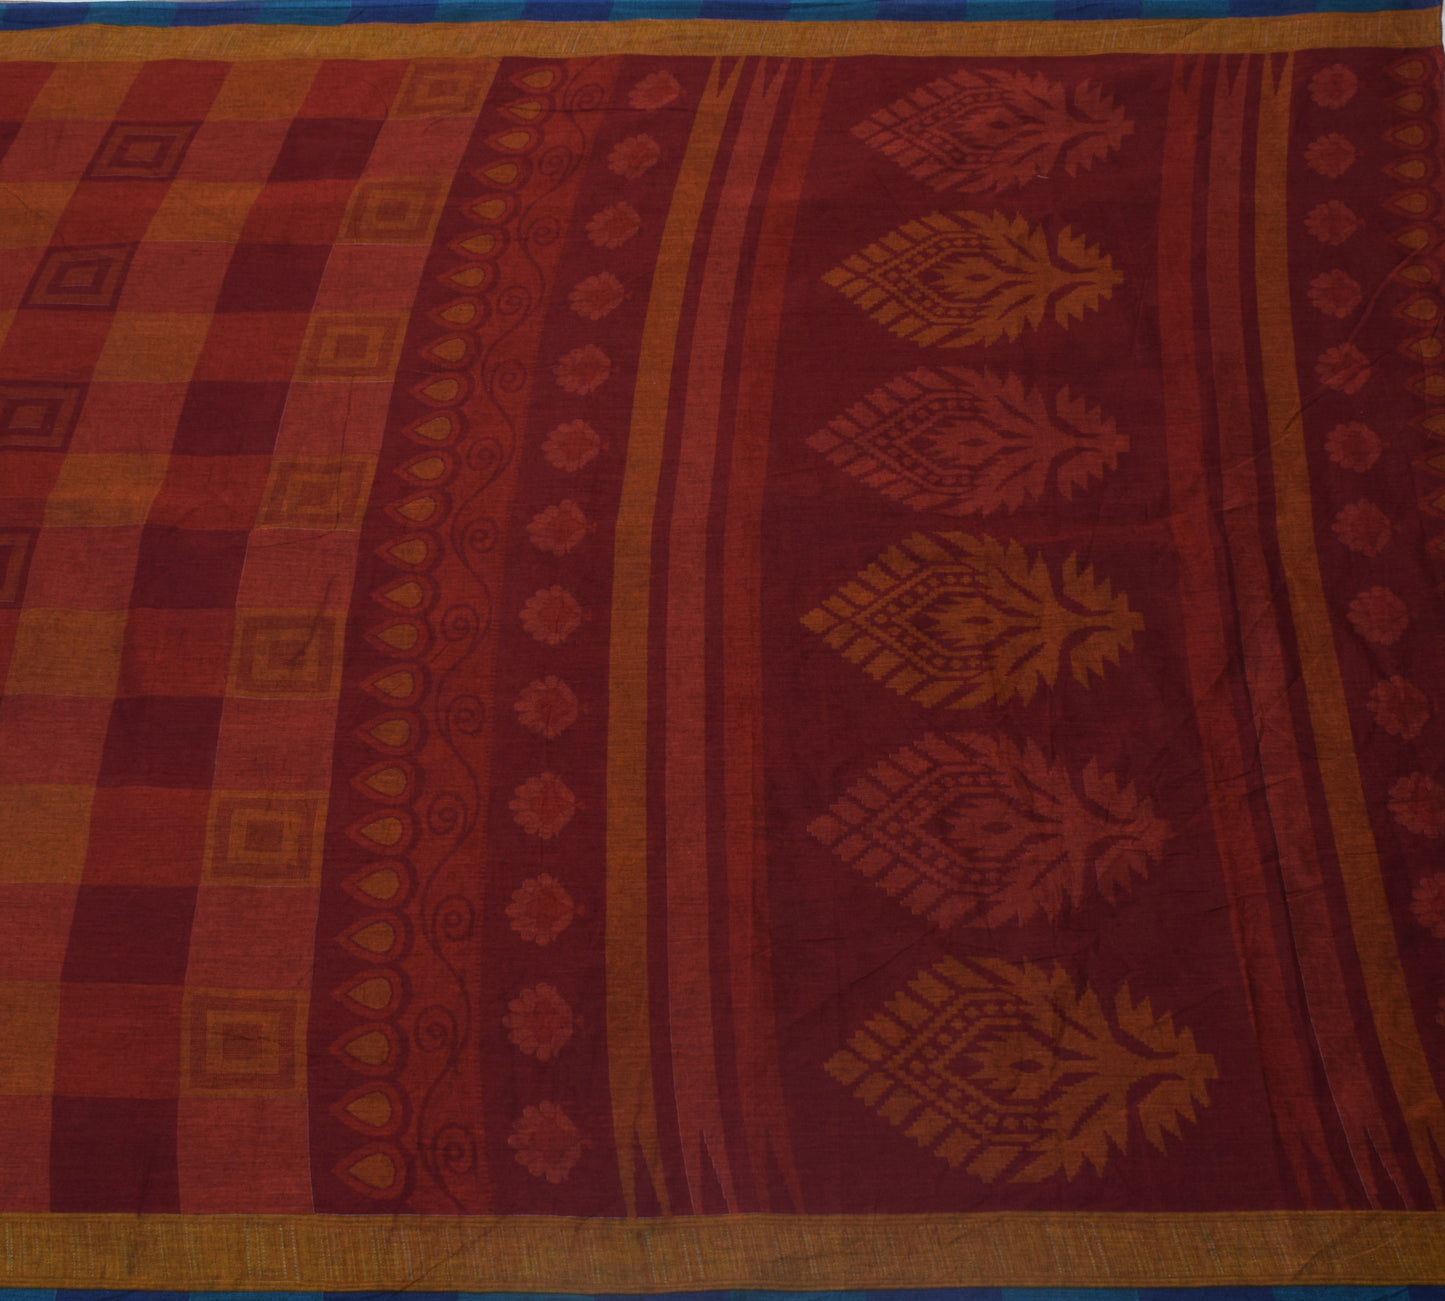 Sushila Vintage Maroon Saree 100% Pure Cotton Printed Floral 5 YD Craft Fabric